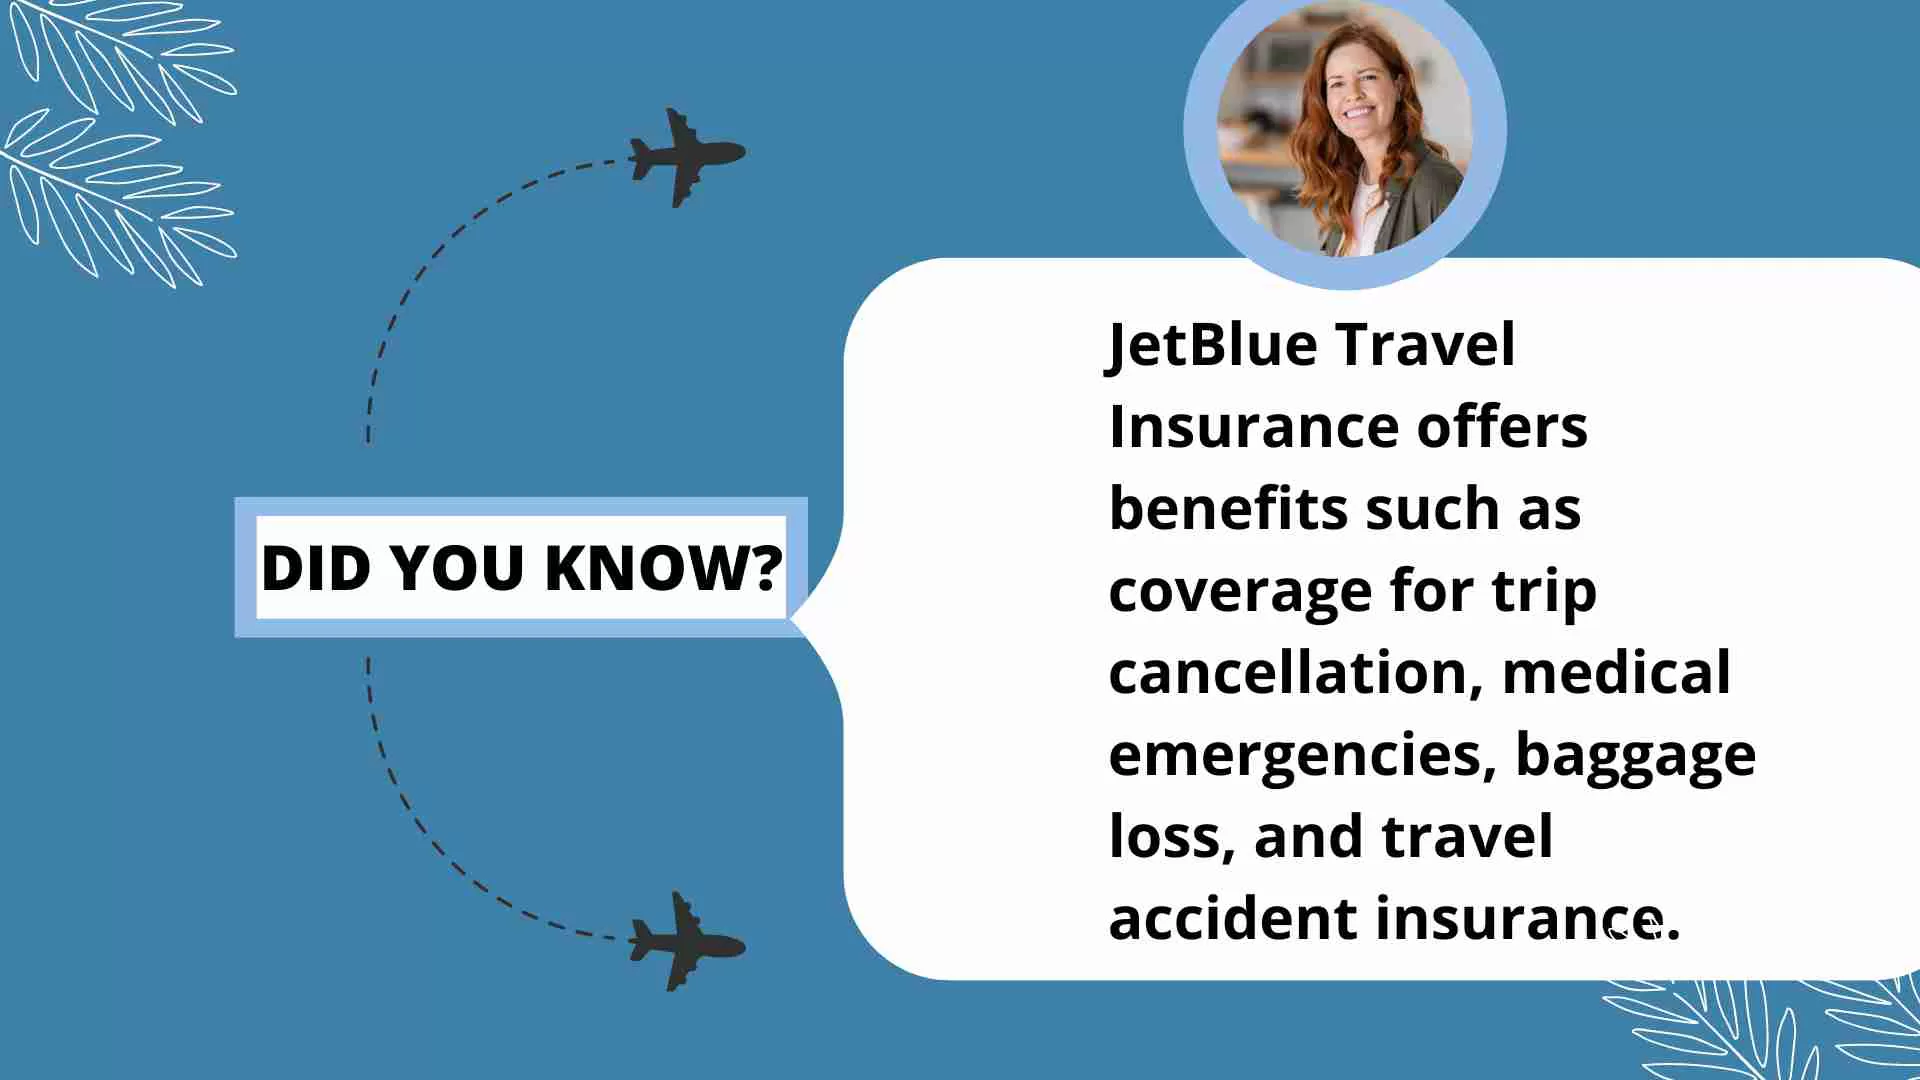 Benefits of JetBlue Travel Insurance